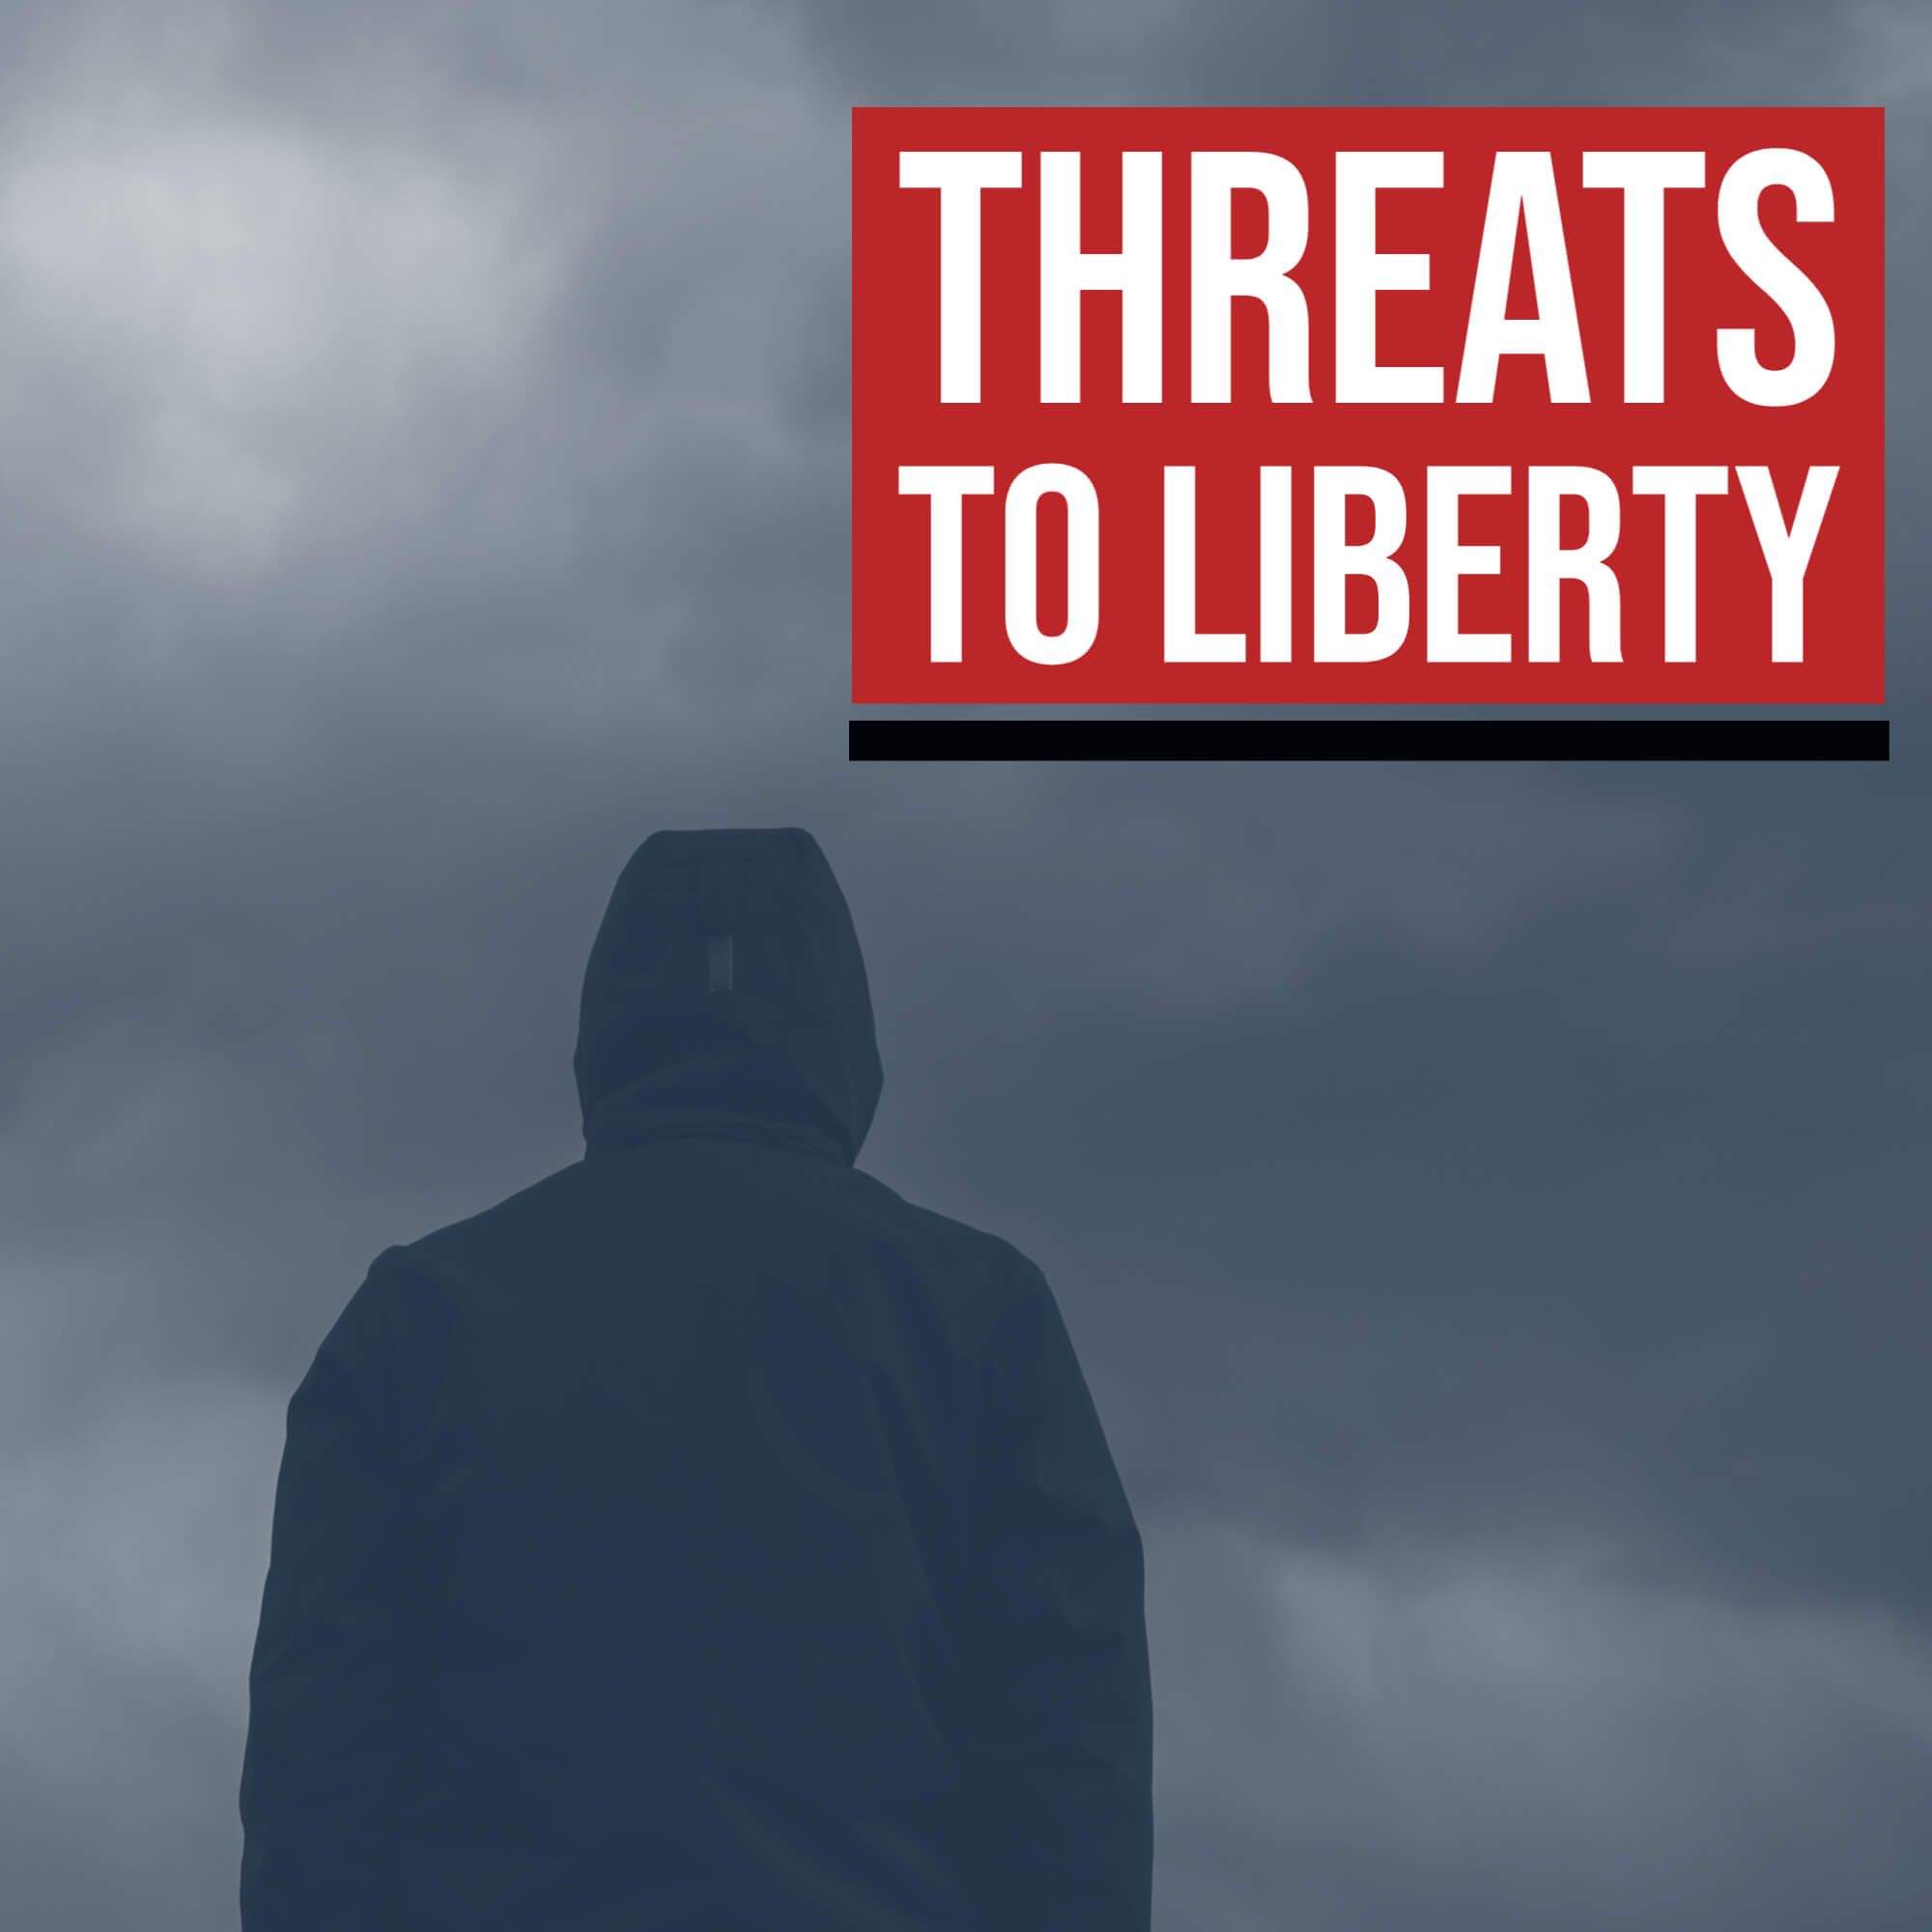 Top-5 Threats to Liberty